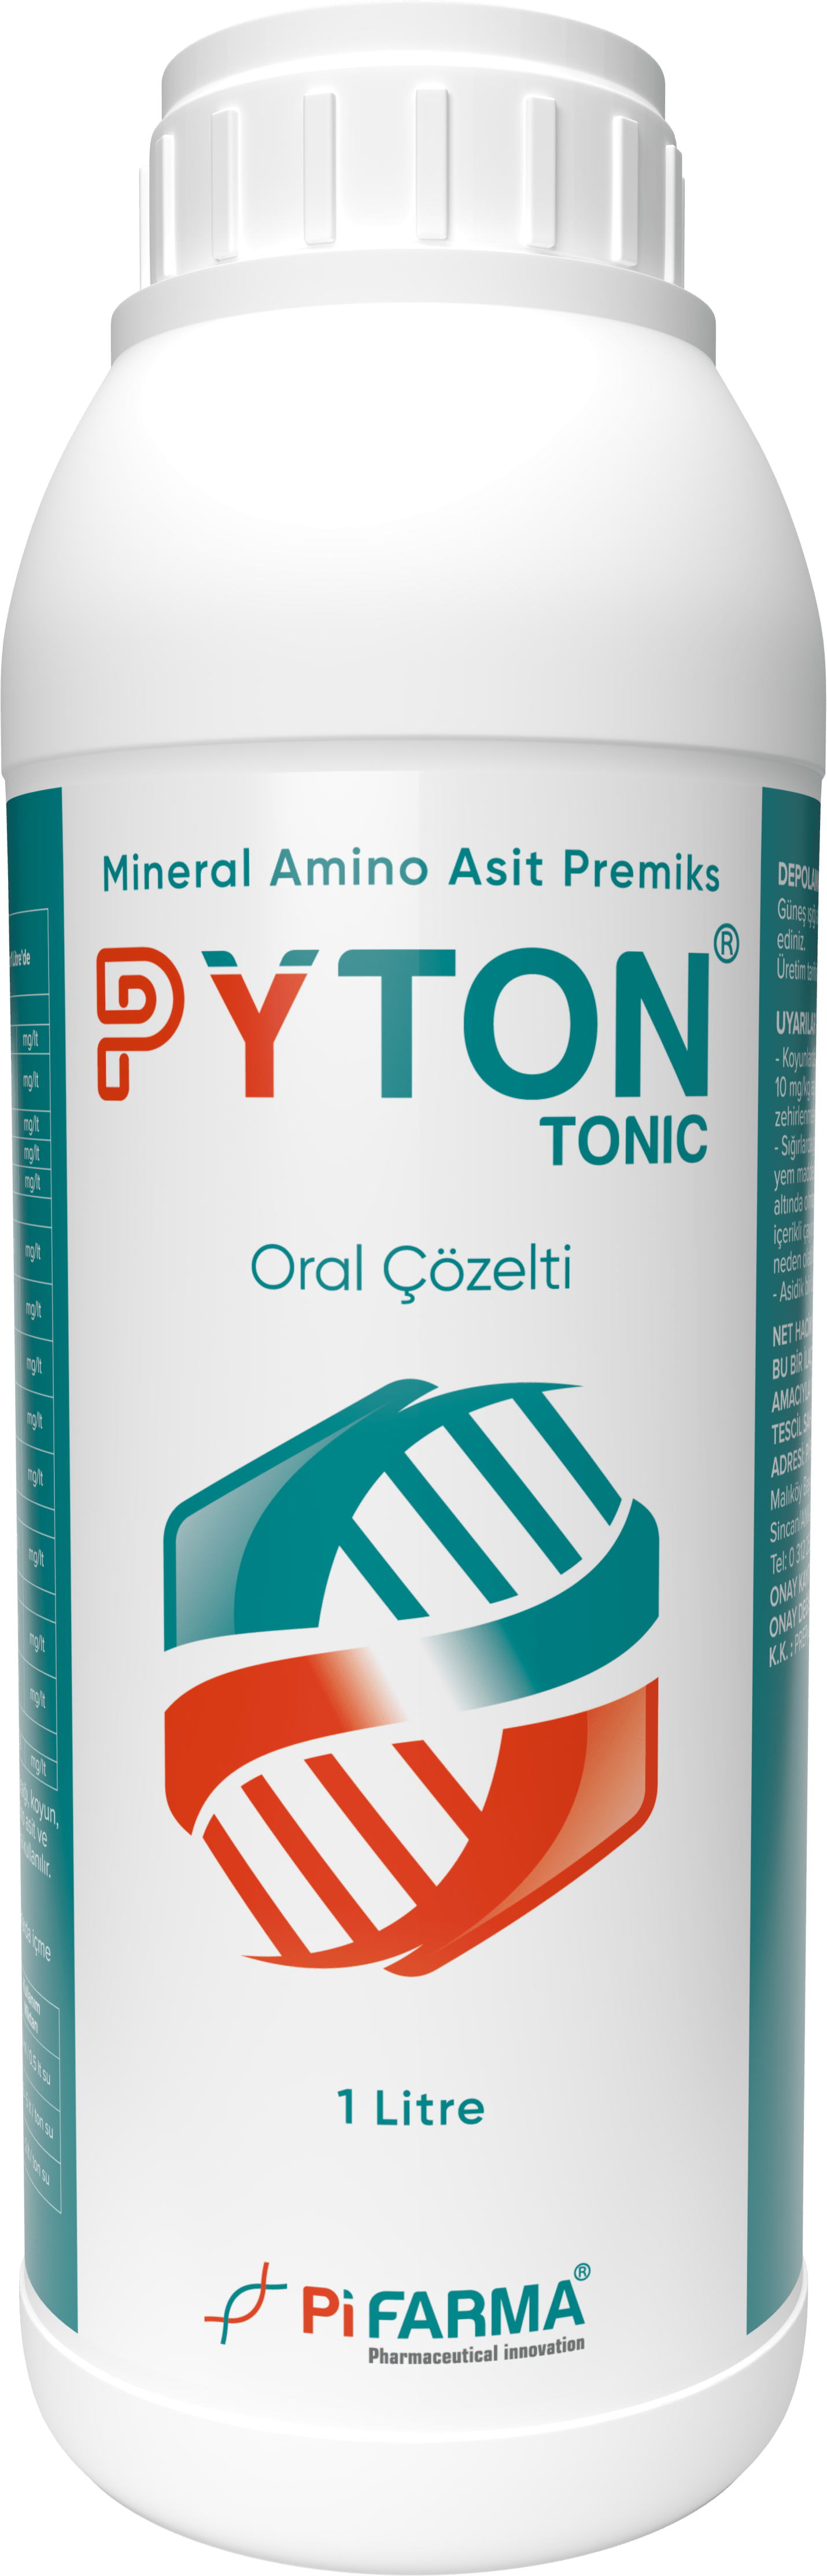 Pyton Tonic®